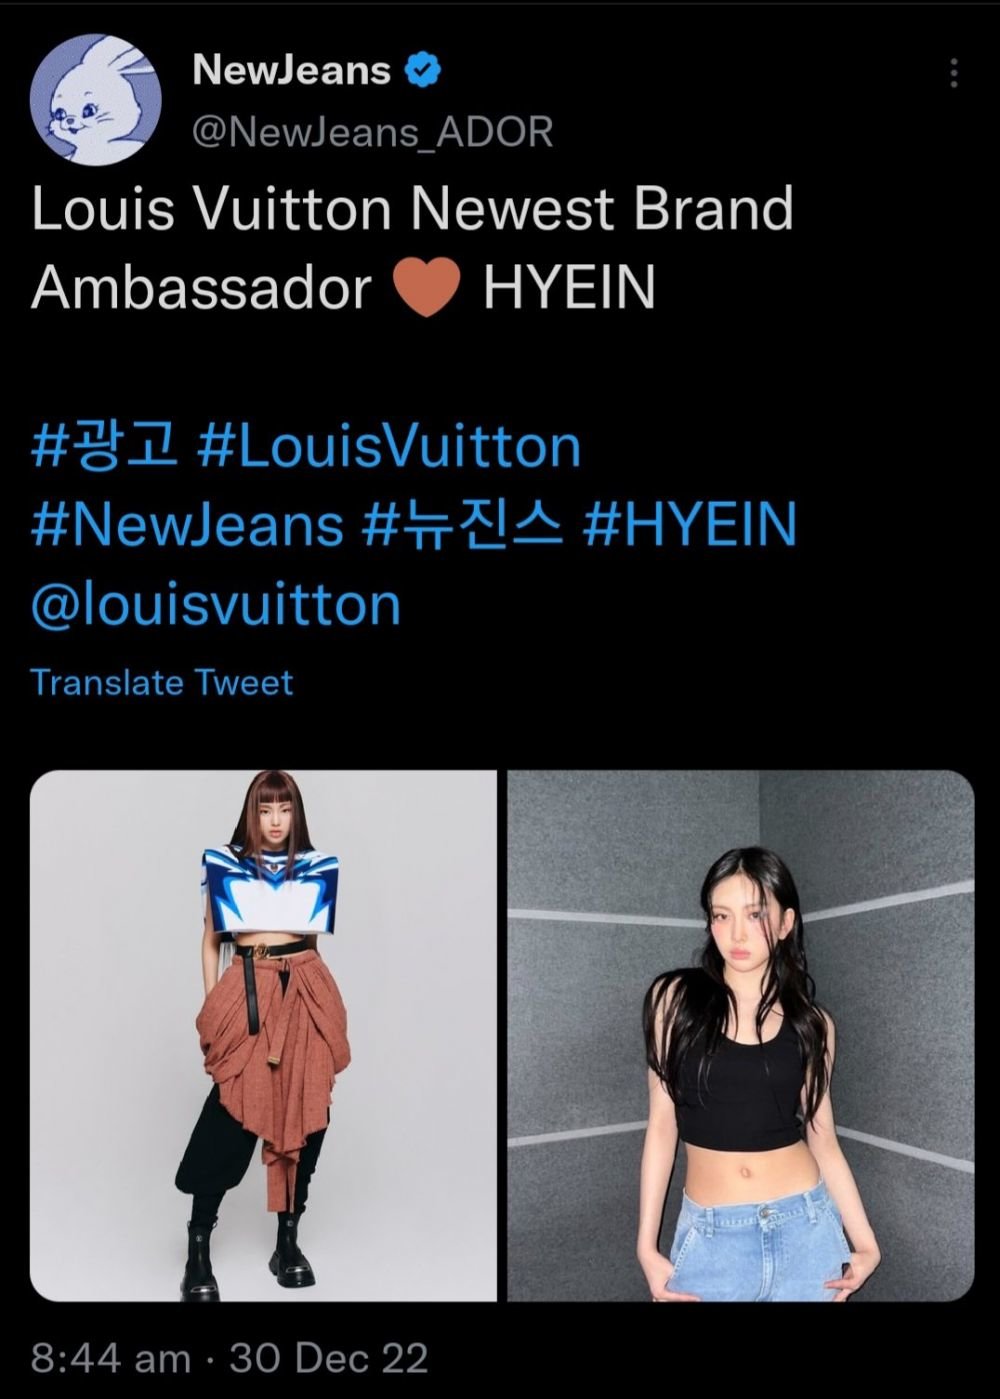 NewJeans Hyein Chosen As Ambassador For Louis Vuitton